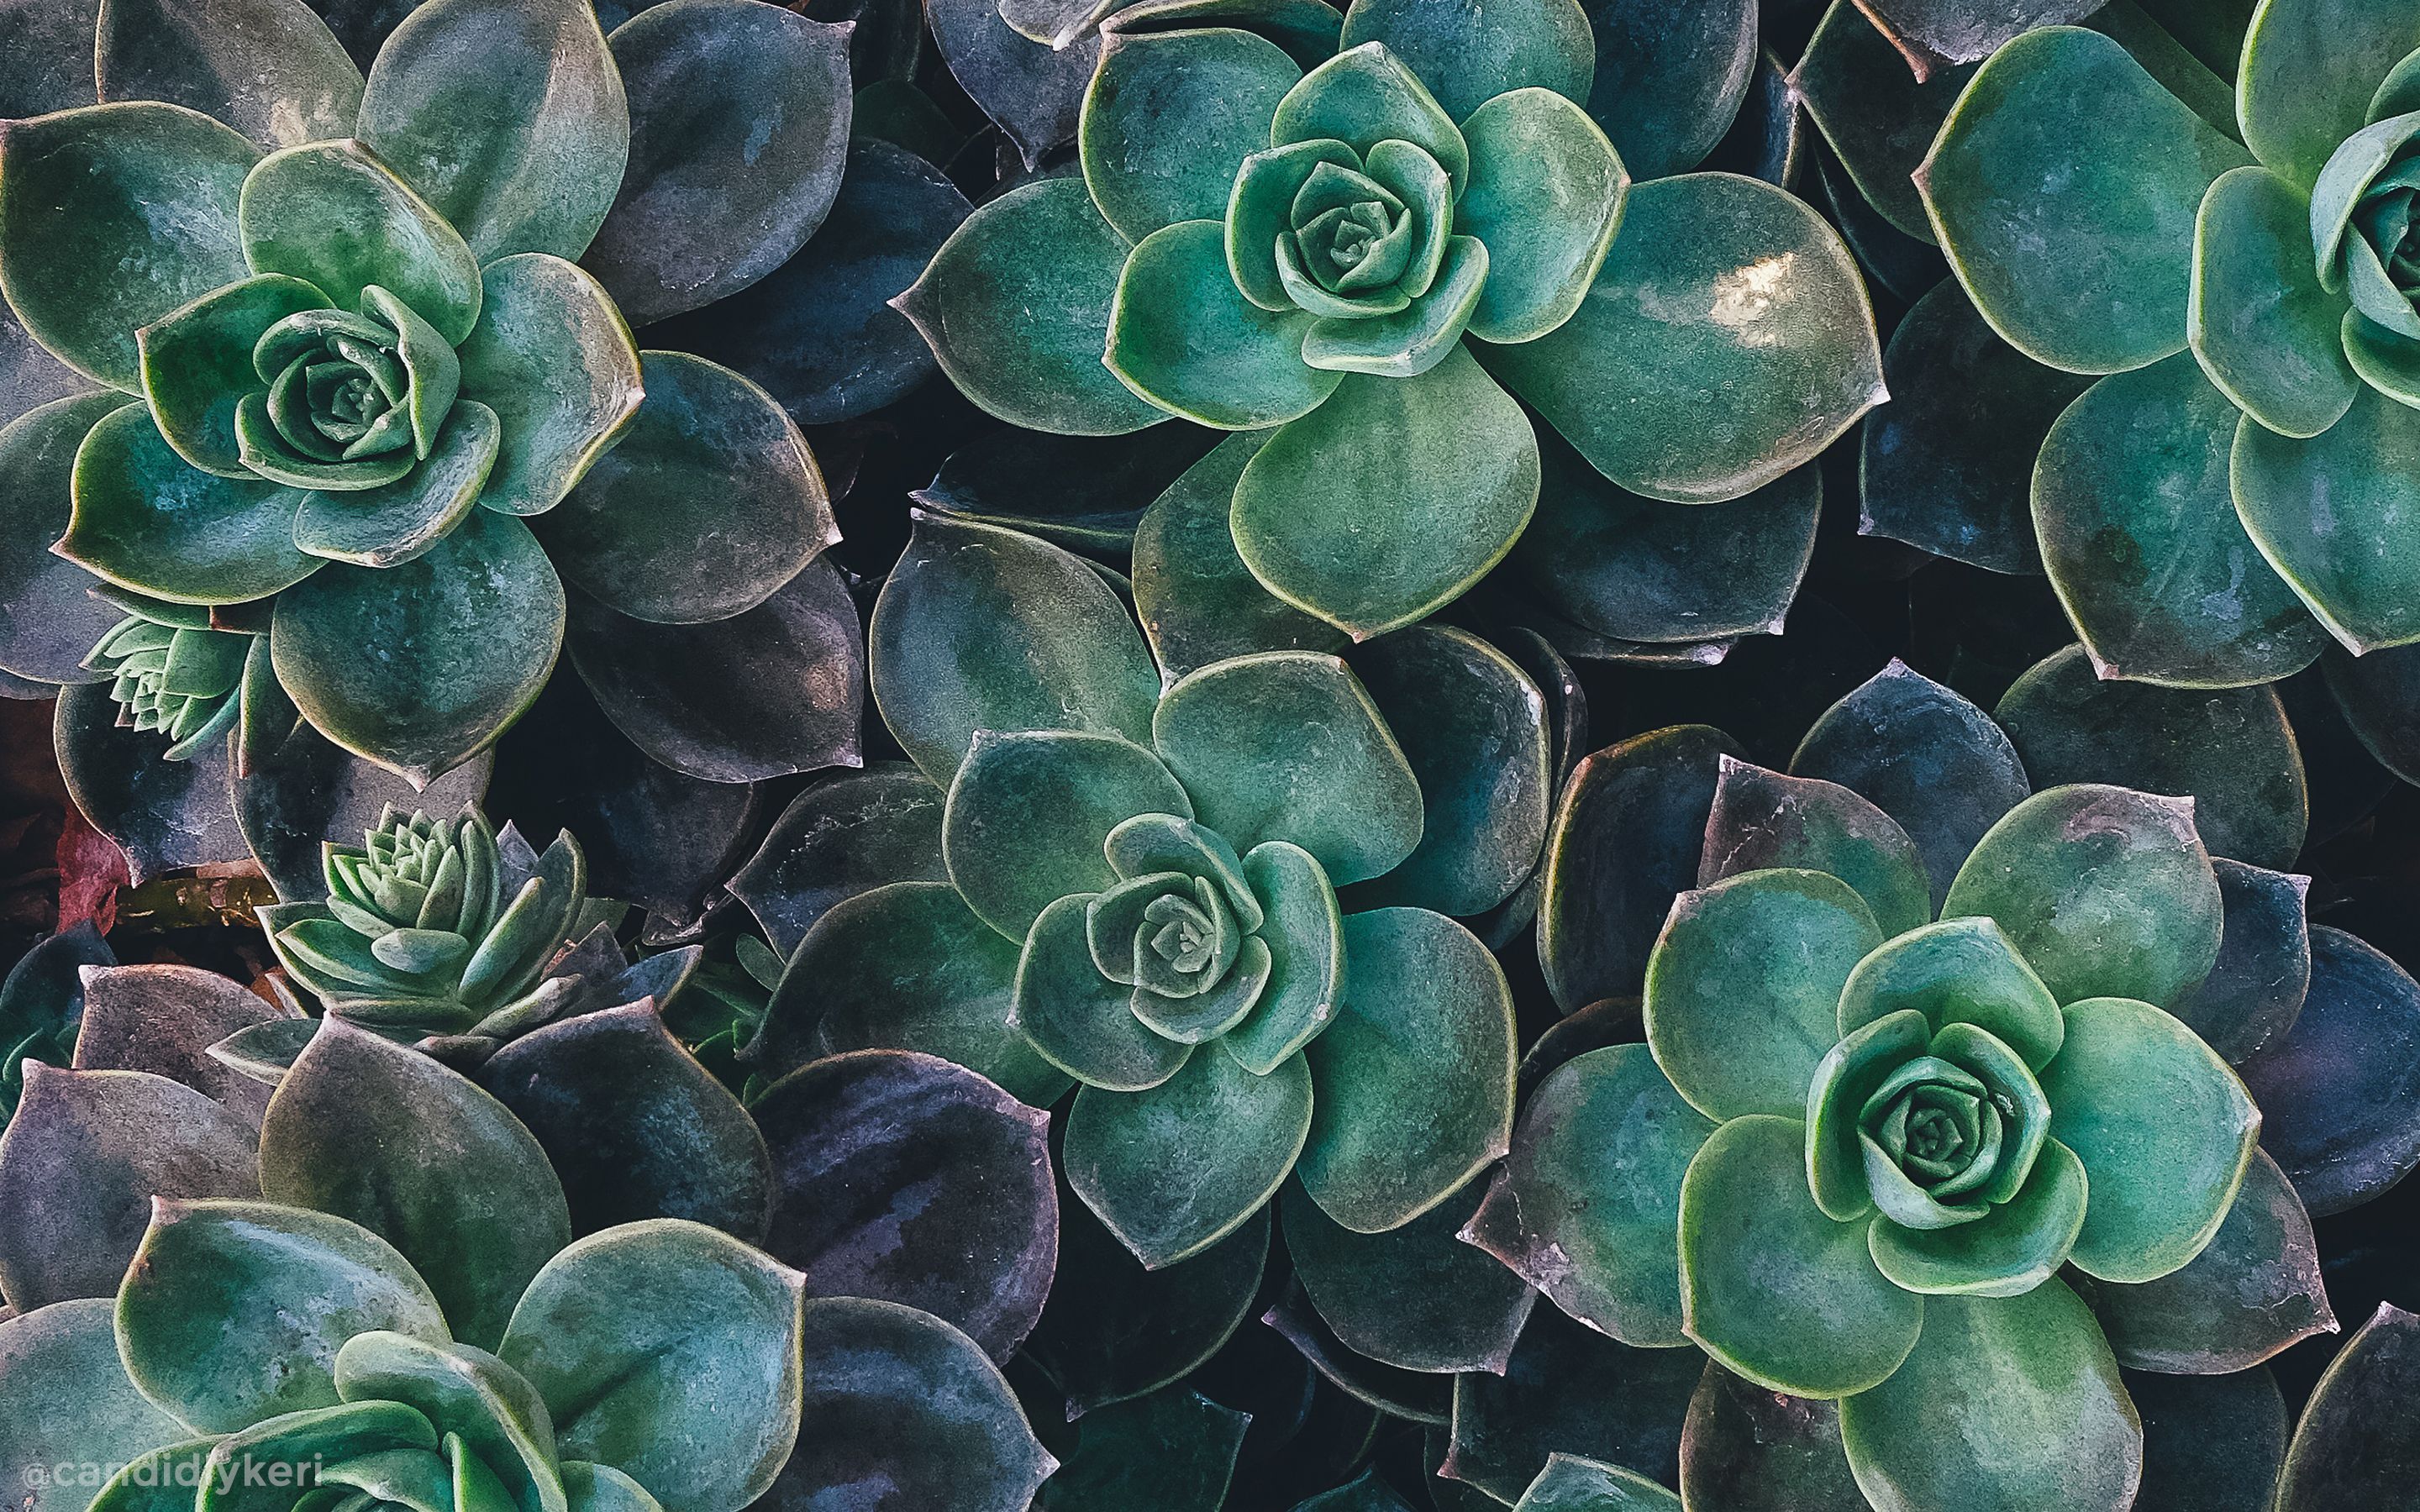 Cute Plant Wallpaper